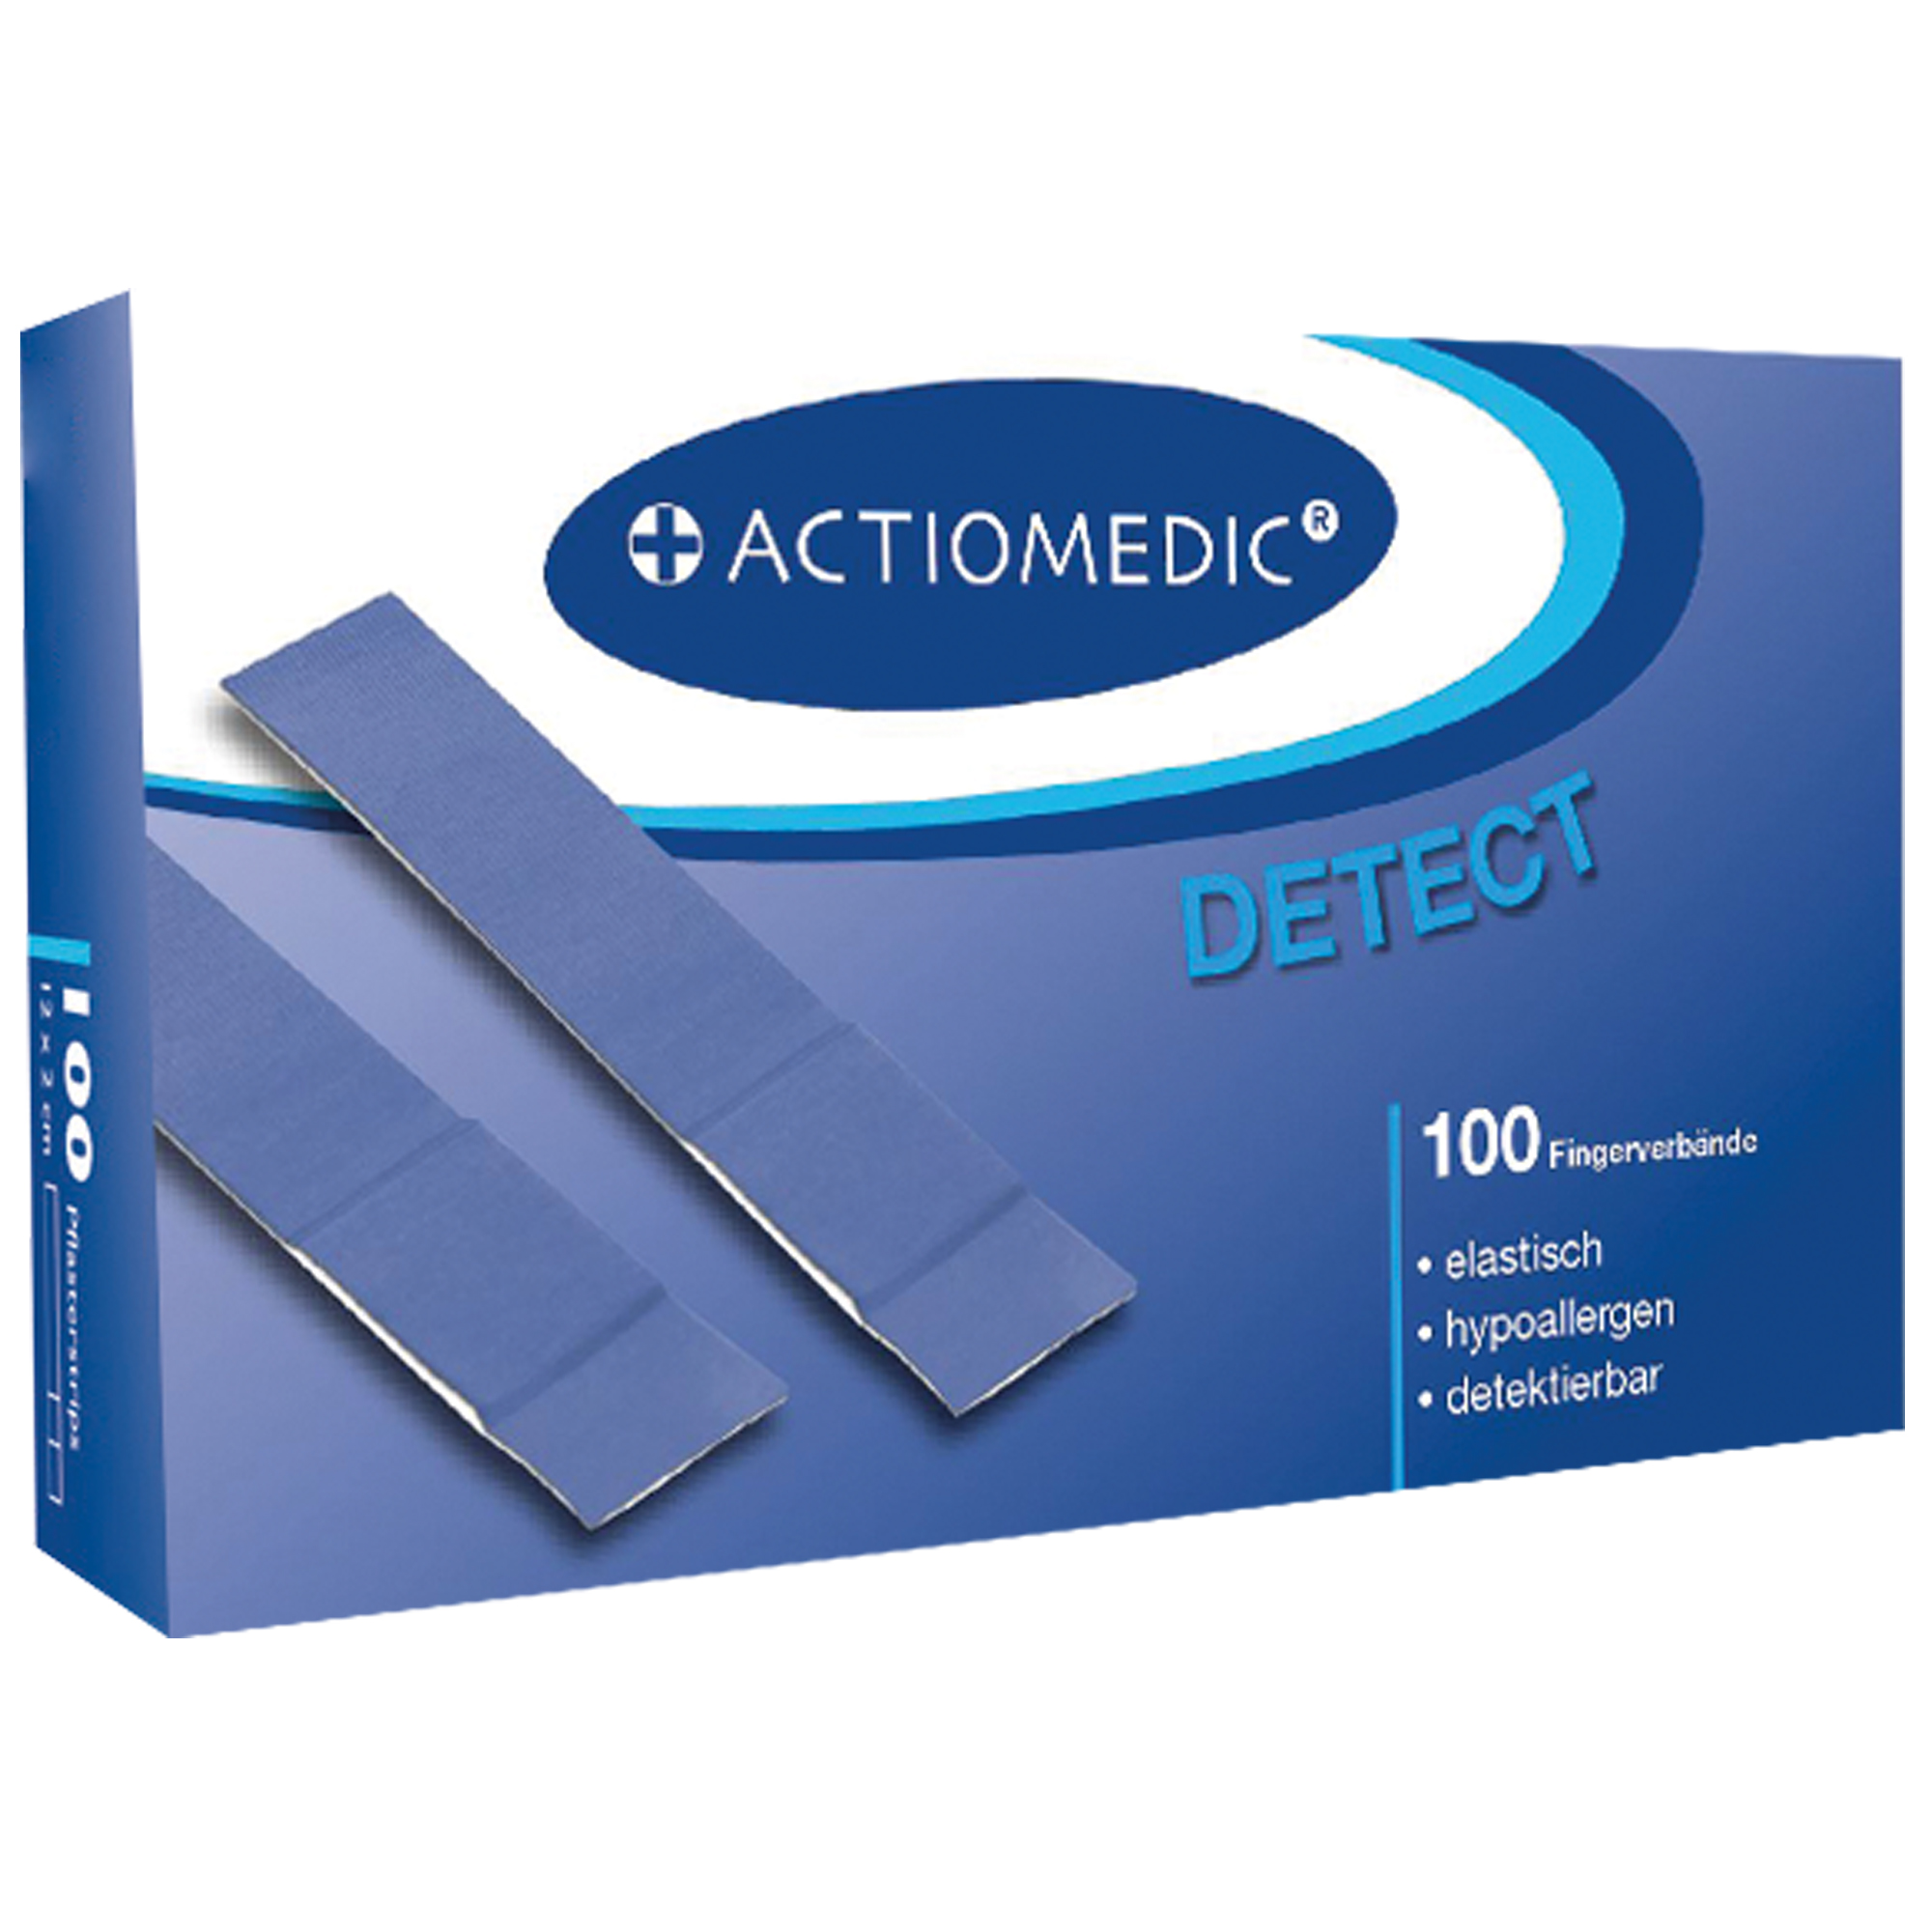 Actiomedic® DETECT Fingerverband elastisch Blau 12 x 2 cm